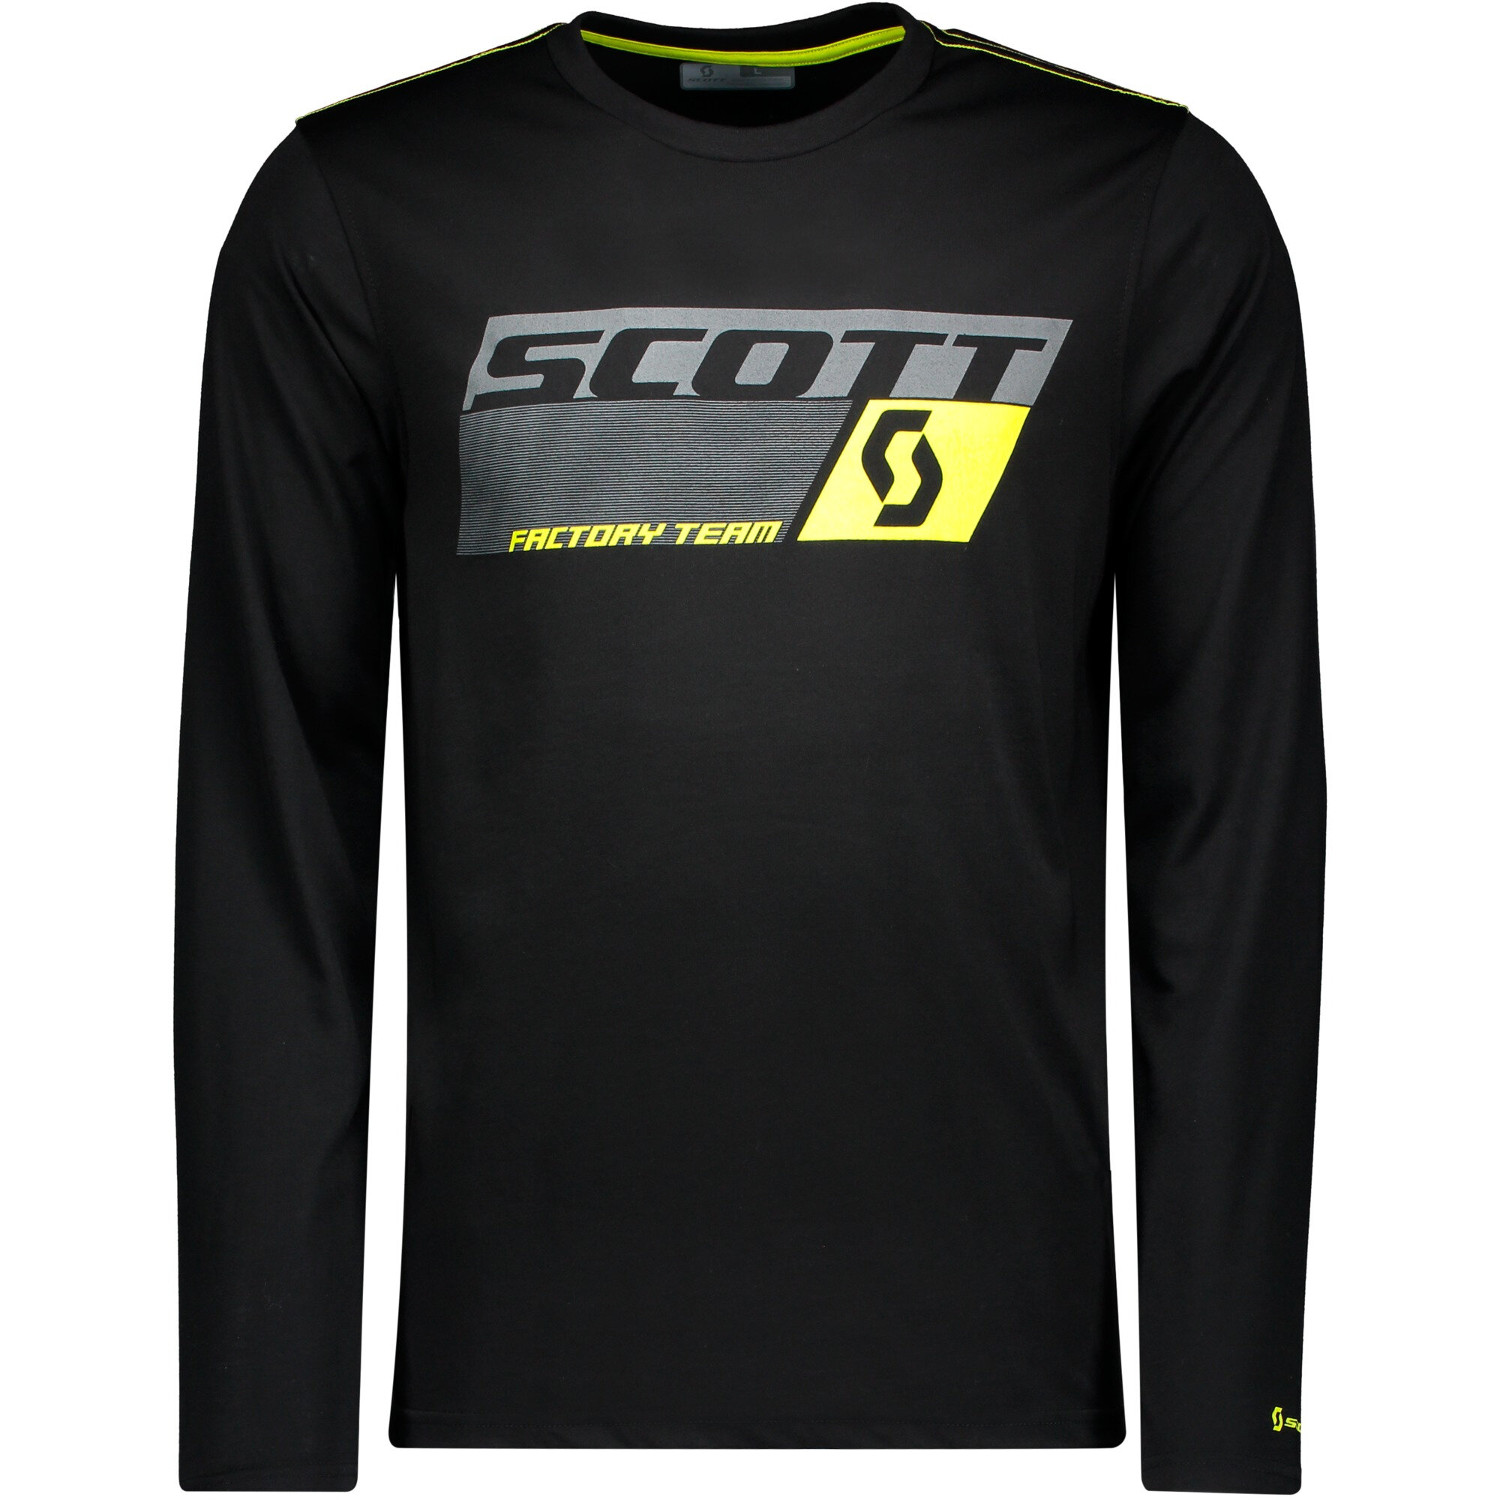 Scott T-Shirt Manica Lunga Factory Team Dri Nero/Sulphur Giallo